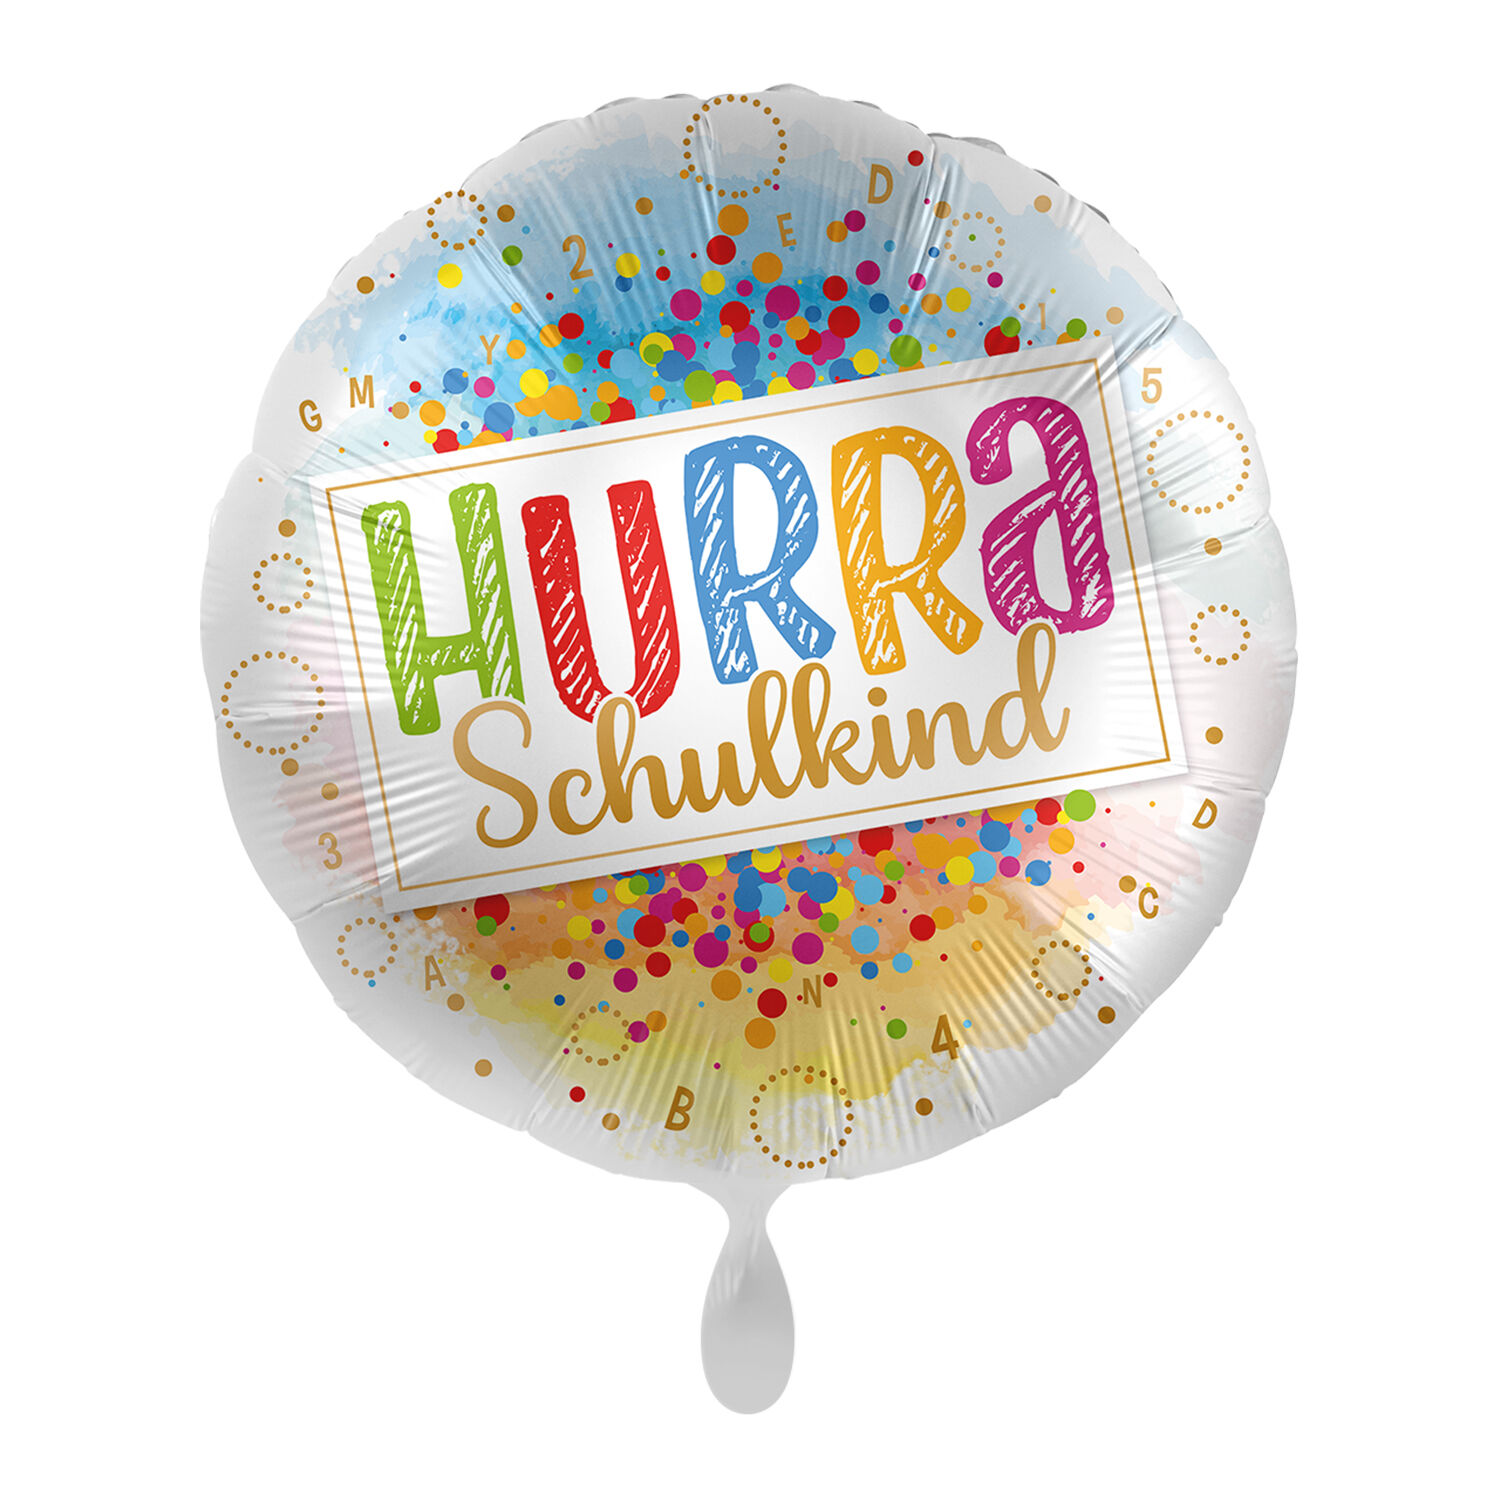 NEU Folienballon - Hurra Schulkind - ca. 45cm Durchmesser